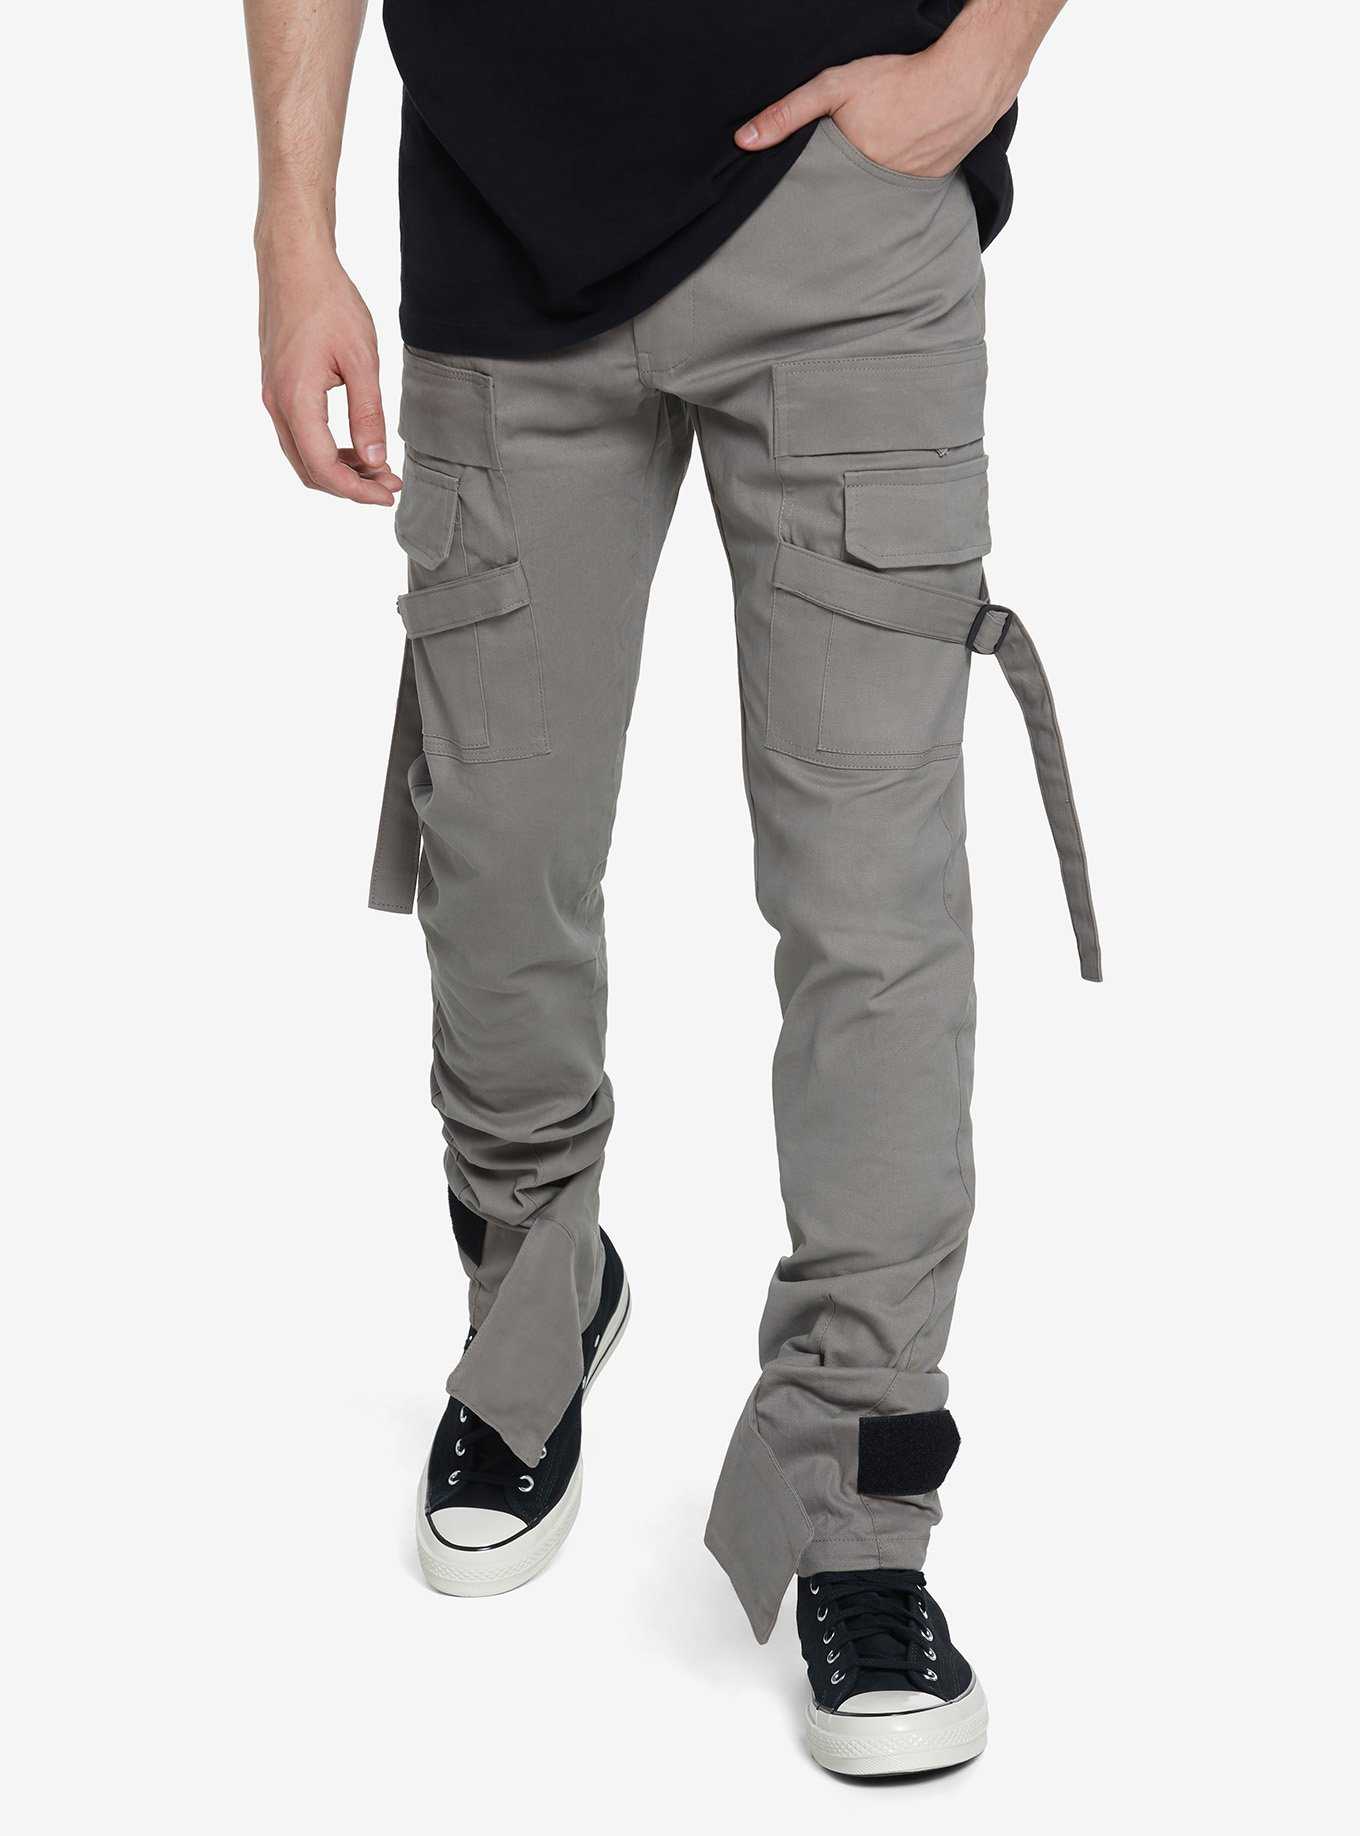 Hot Topic Grey Plaid Pants Size 2X